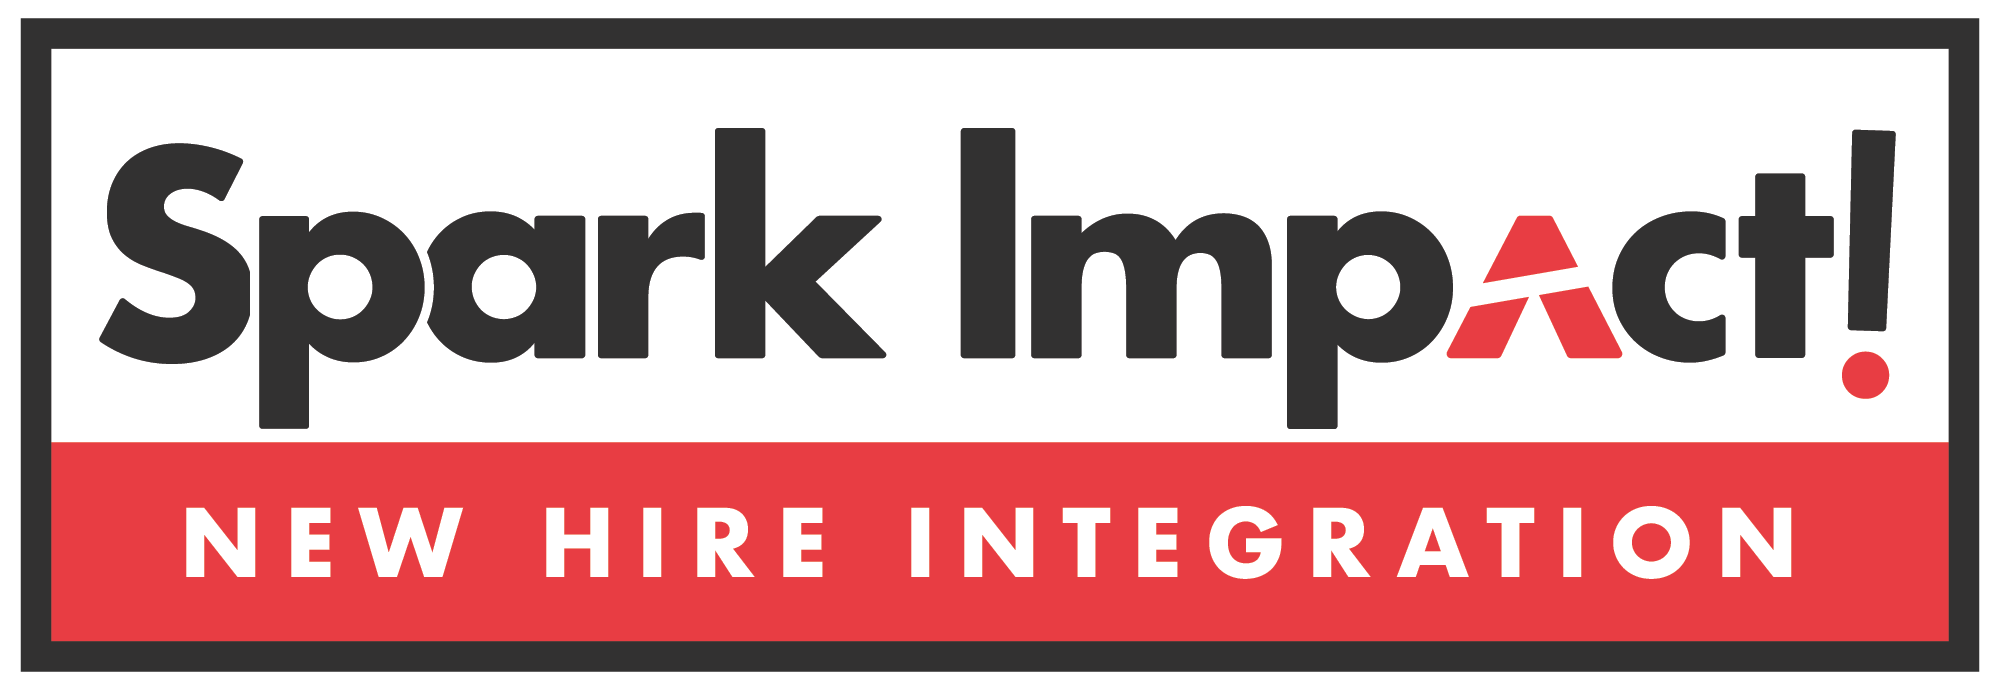 Spark Impact New Hire Integration